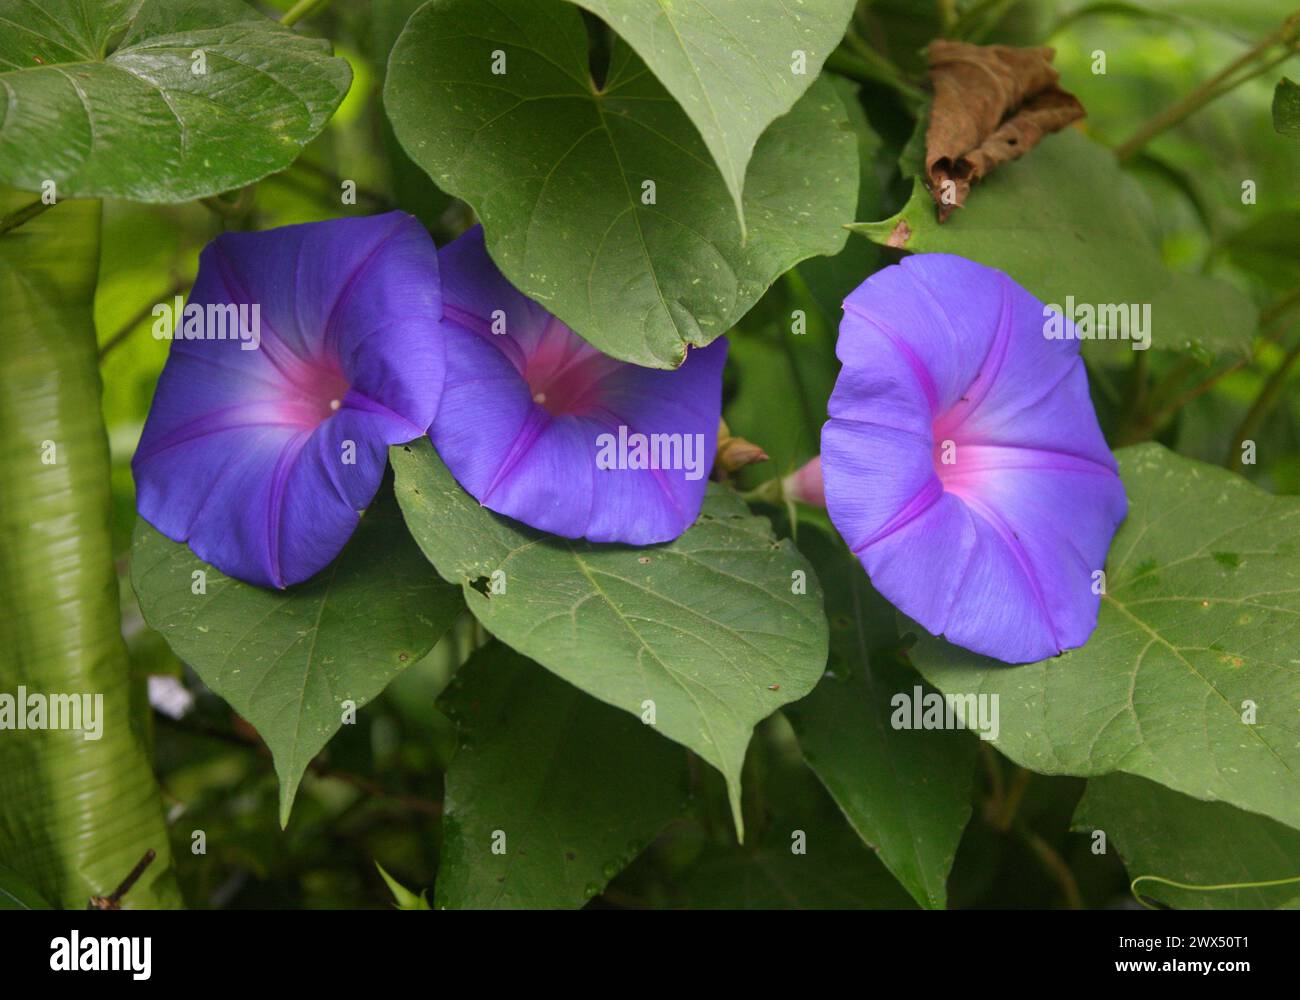 Common or Morning Glory, Ipomoea purpurea, Convolvulaceae. Costa Rica. Stock Photo